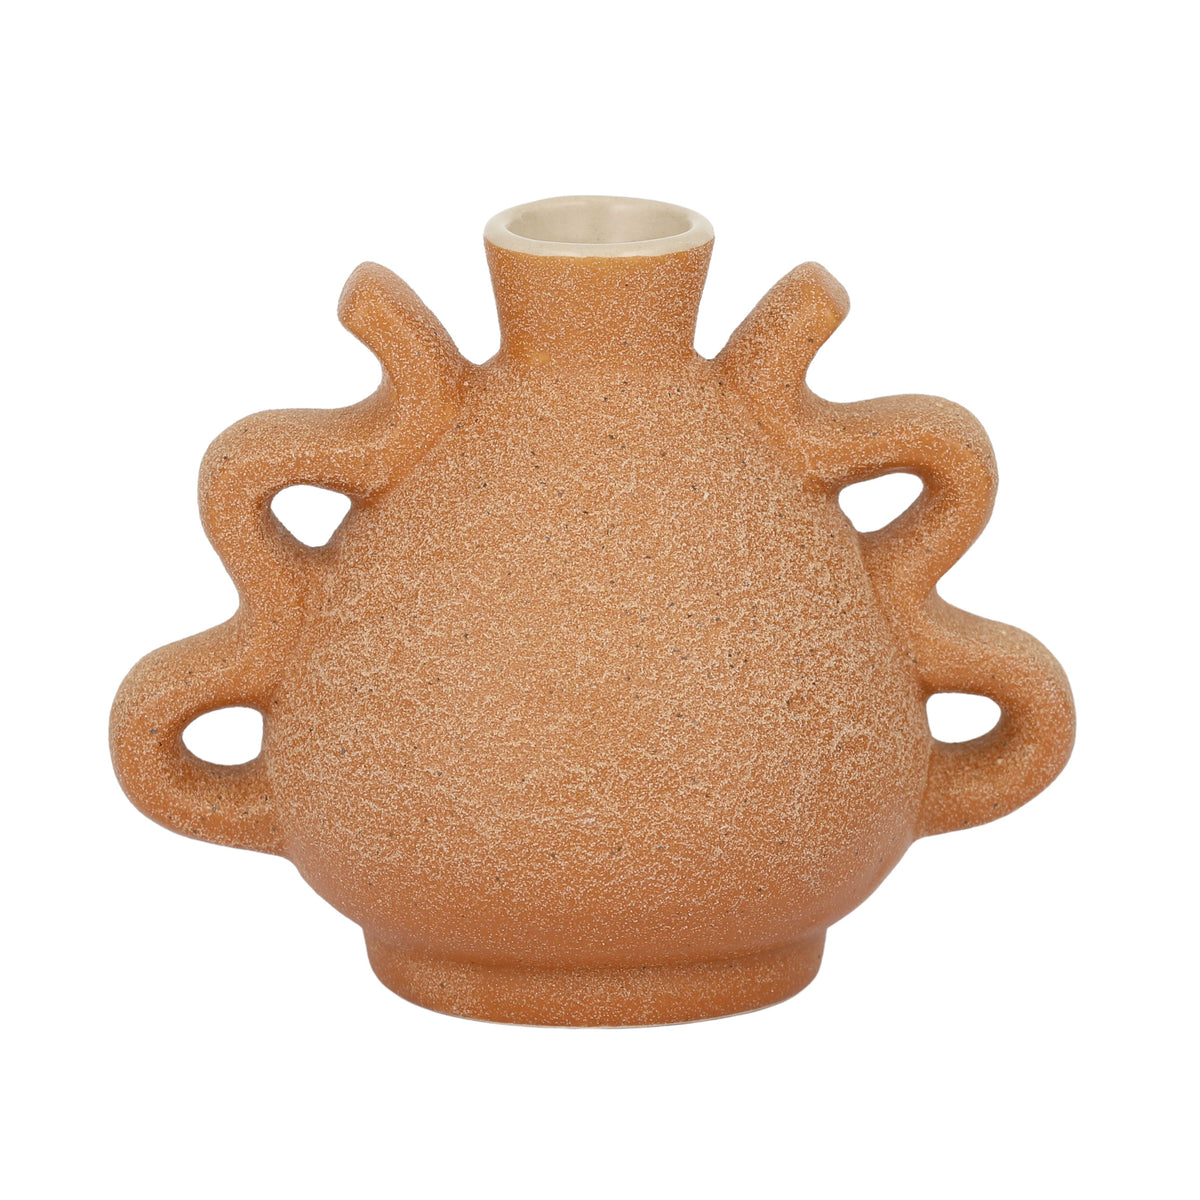 Hilbert Ceramic Vase